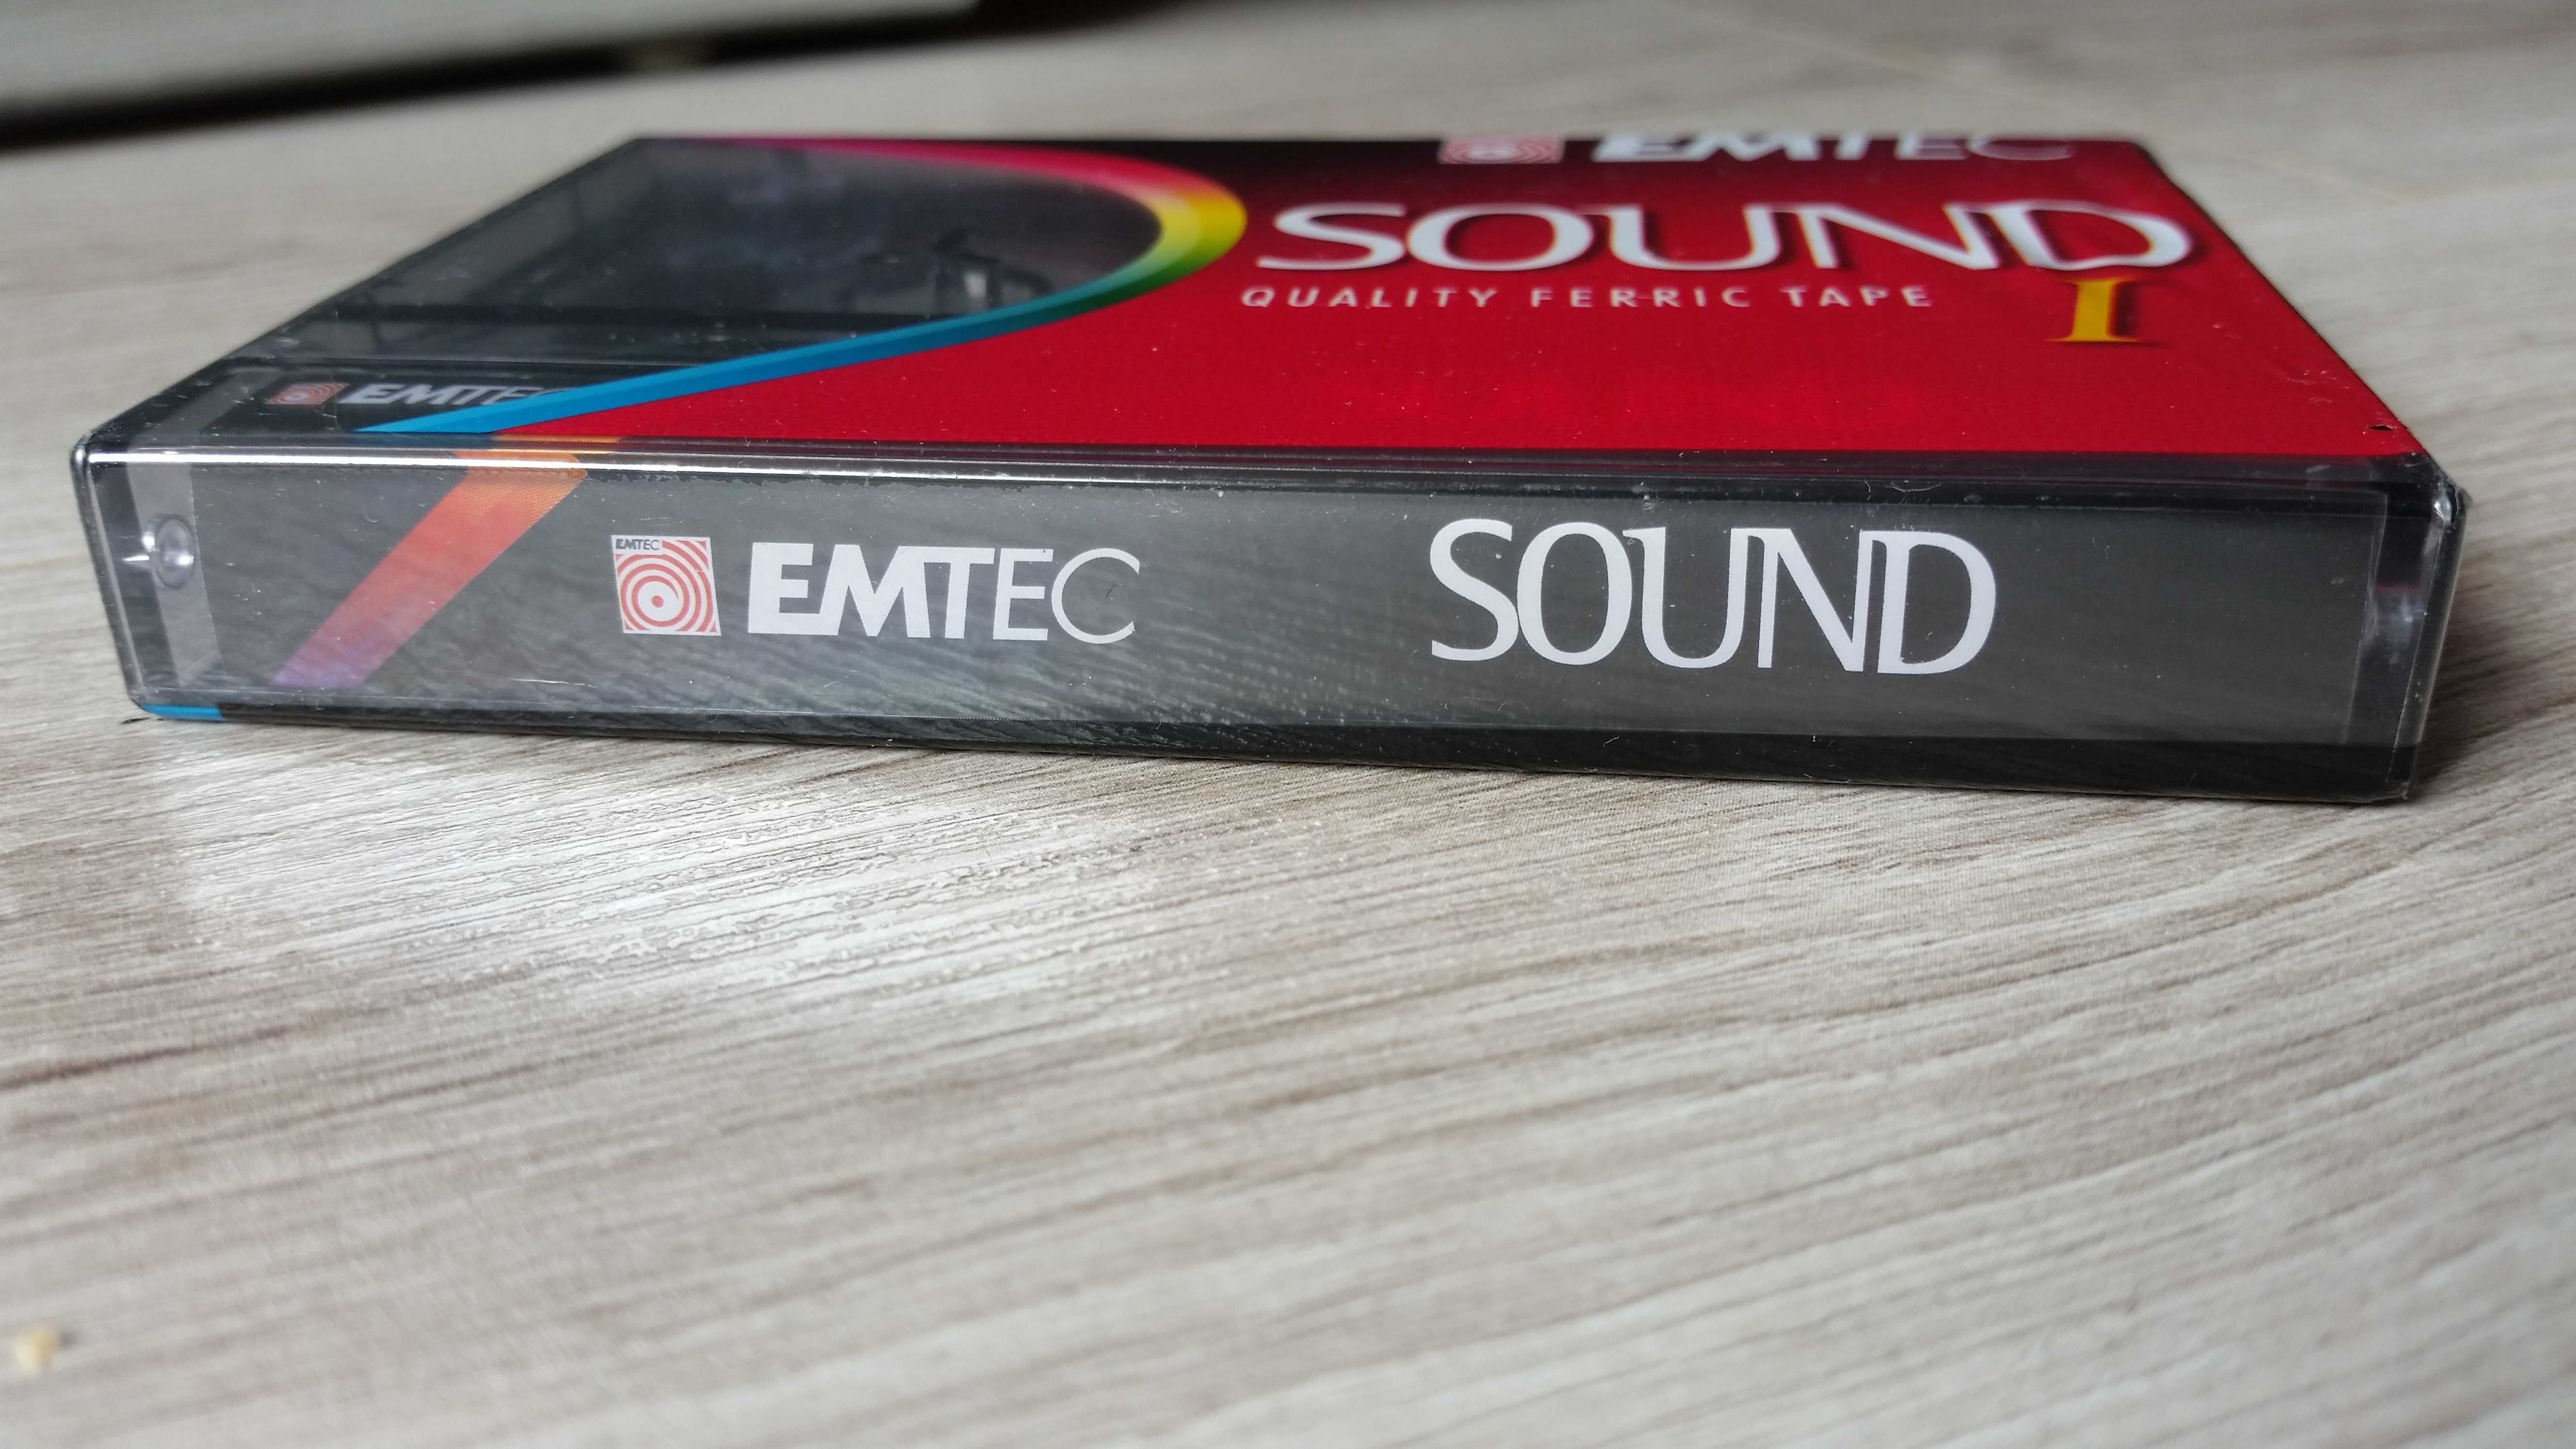 Kaseta EMTEC Sound I 60 FE